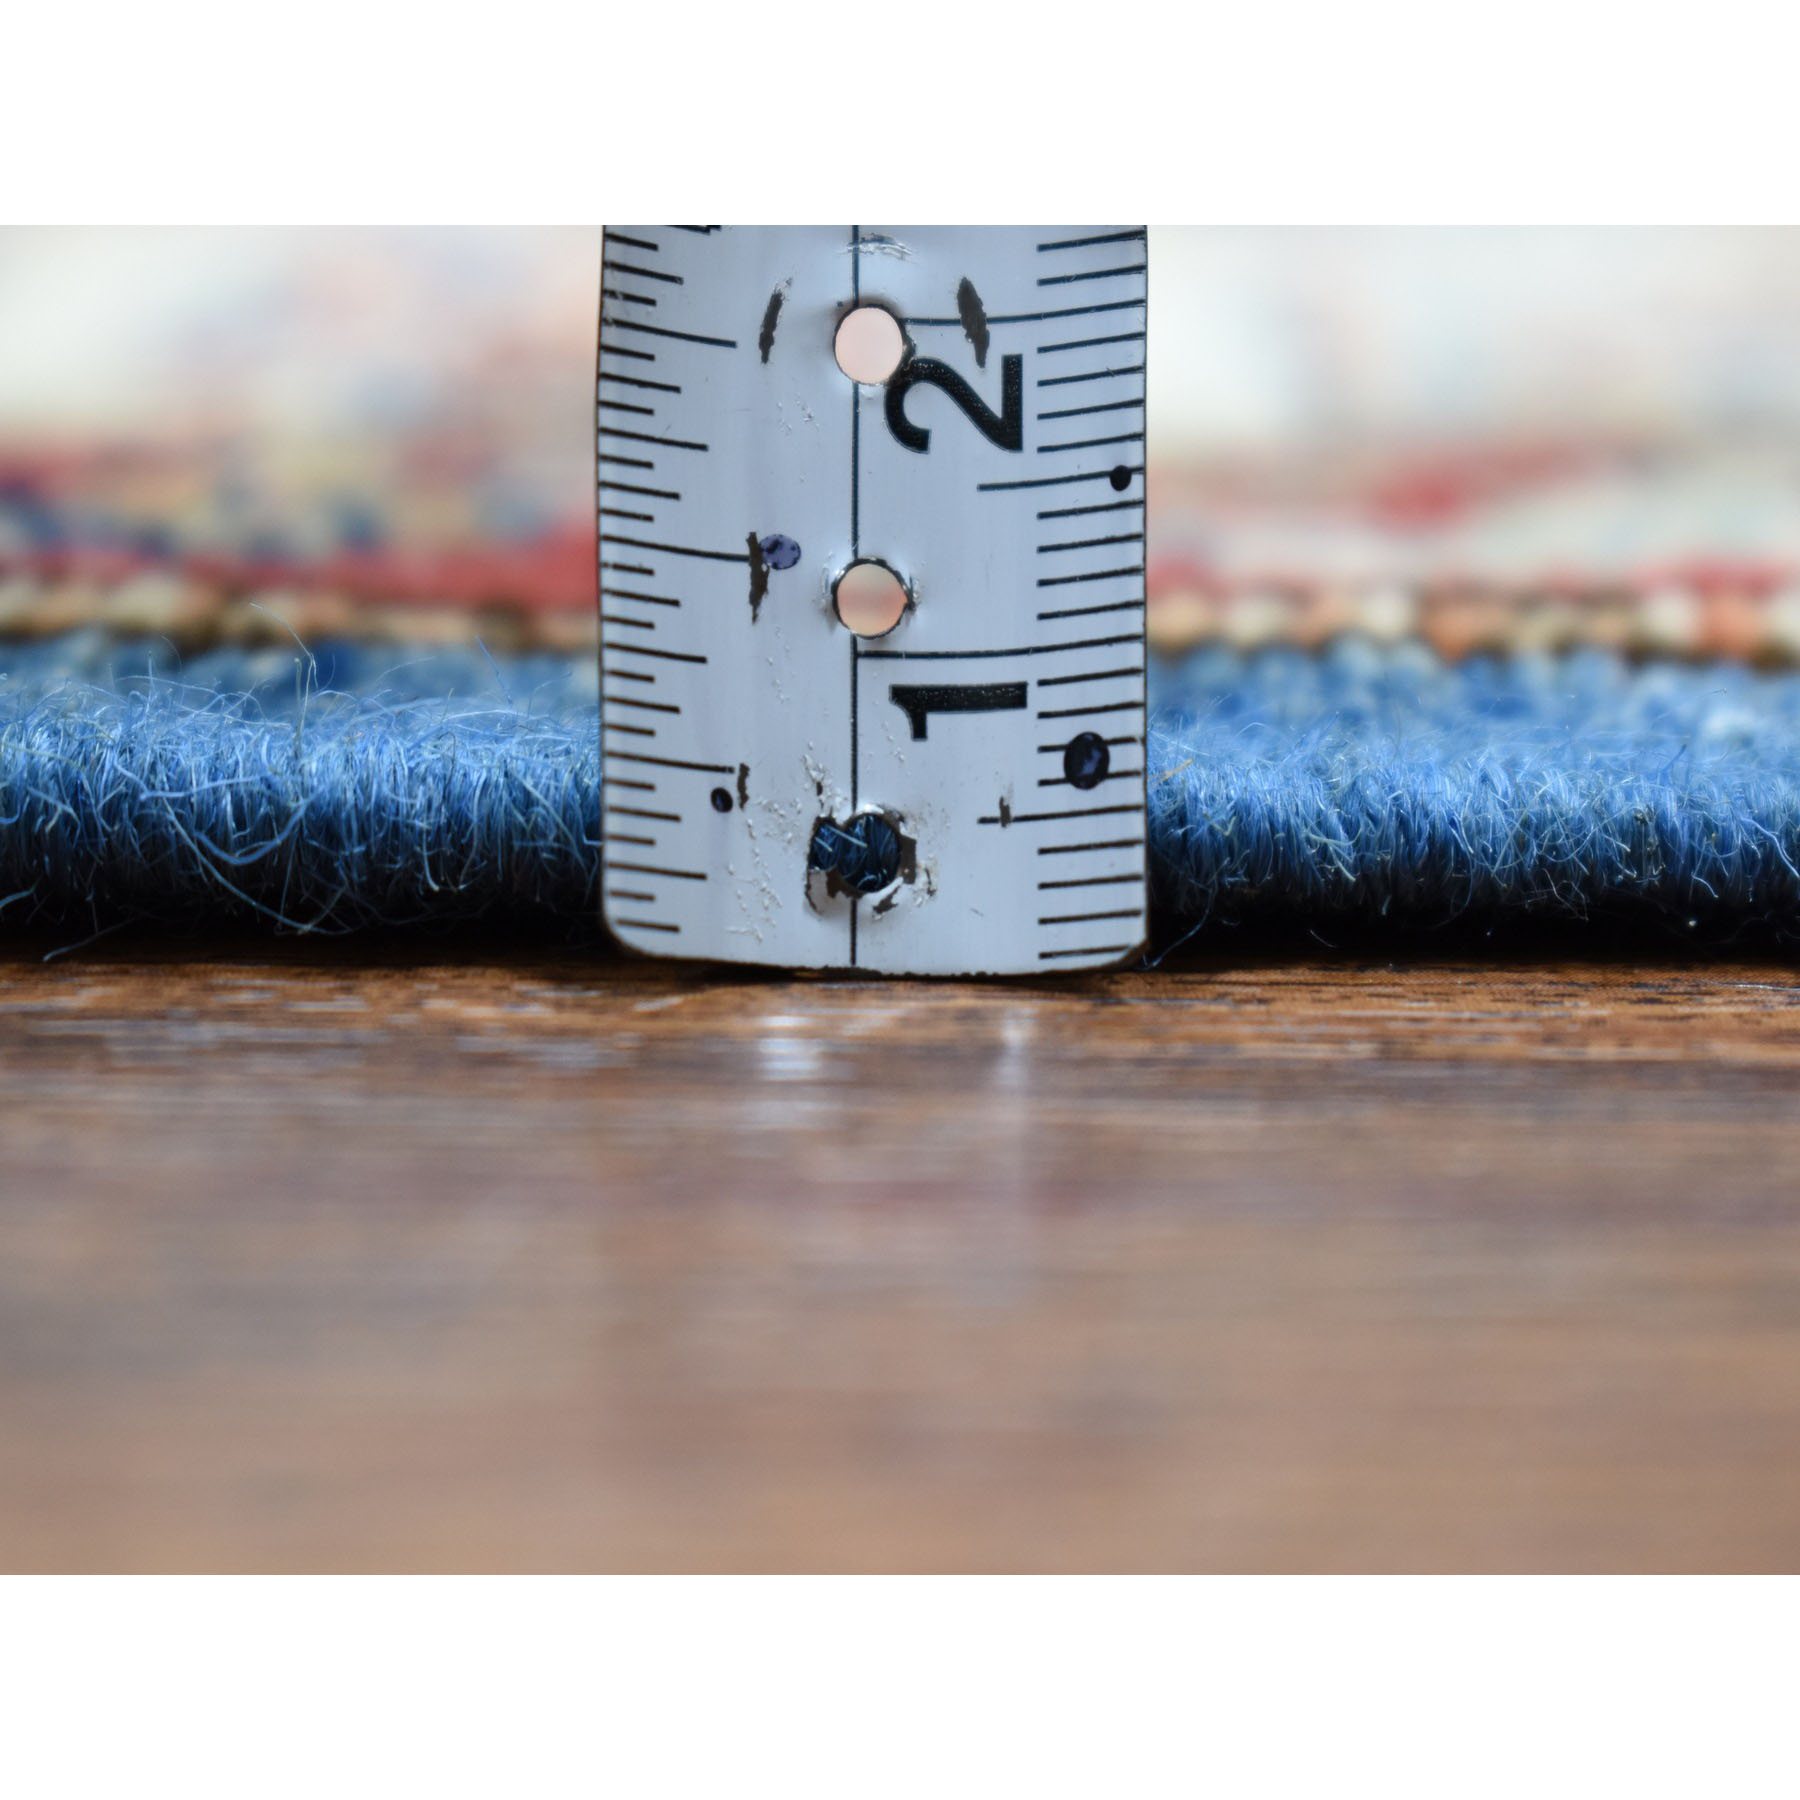 2-7 x4- Blue Super Kazak Pure Wool Geometric Design Hand-Knotted Oriental Rug 